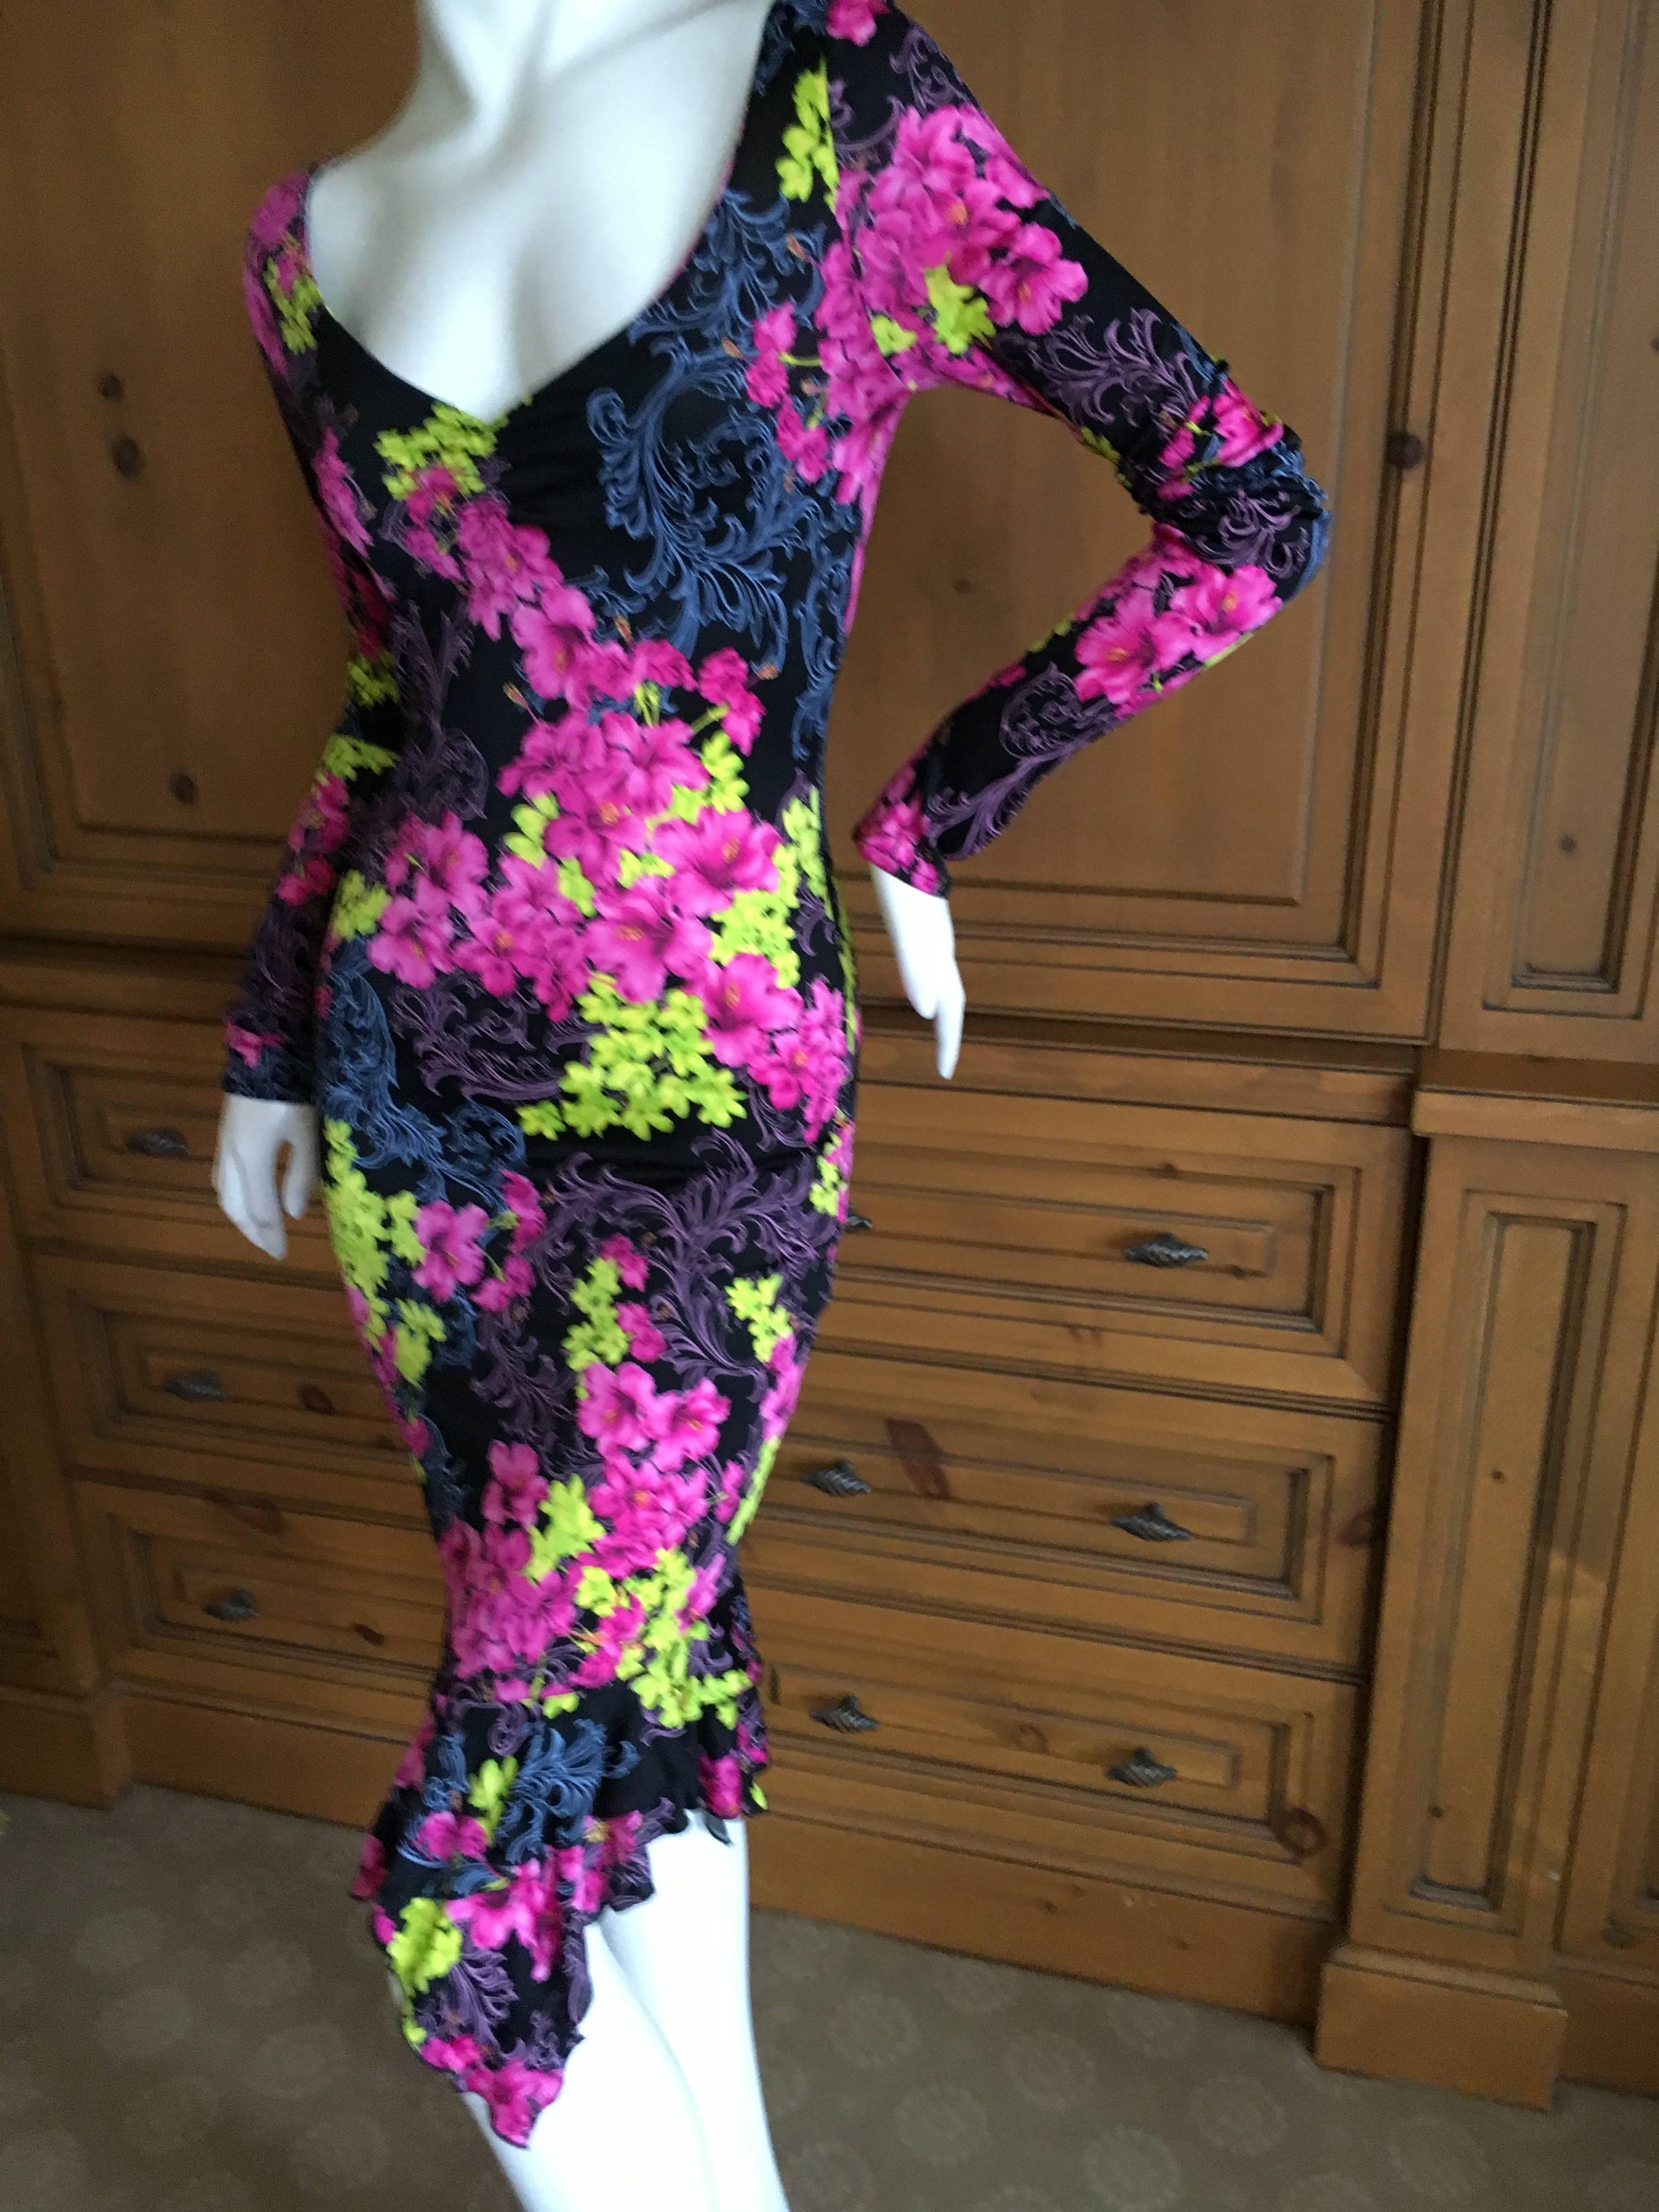 Vintage Versace Jeans Couture Tropical Floral Dress.
Size XS.
Bust 34